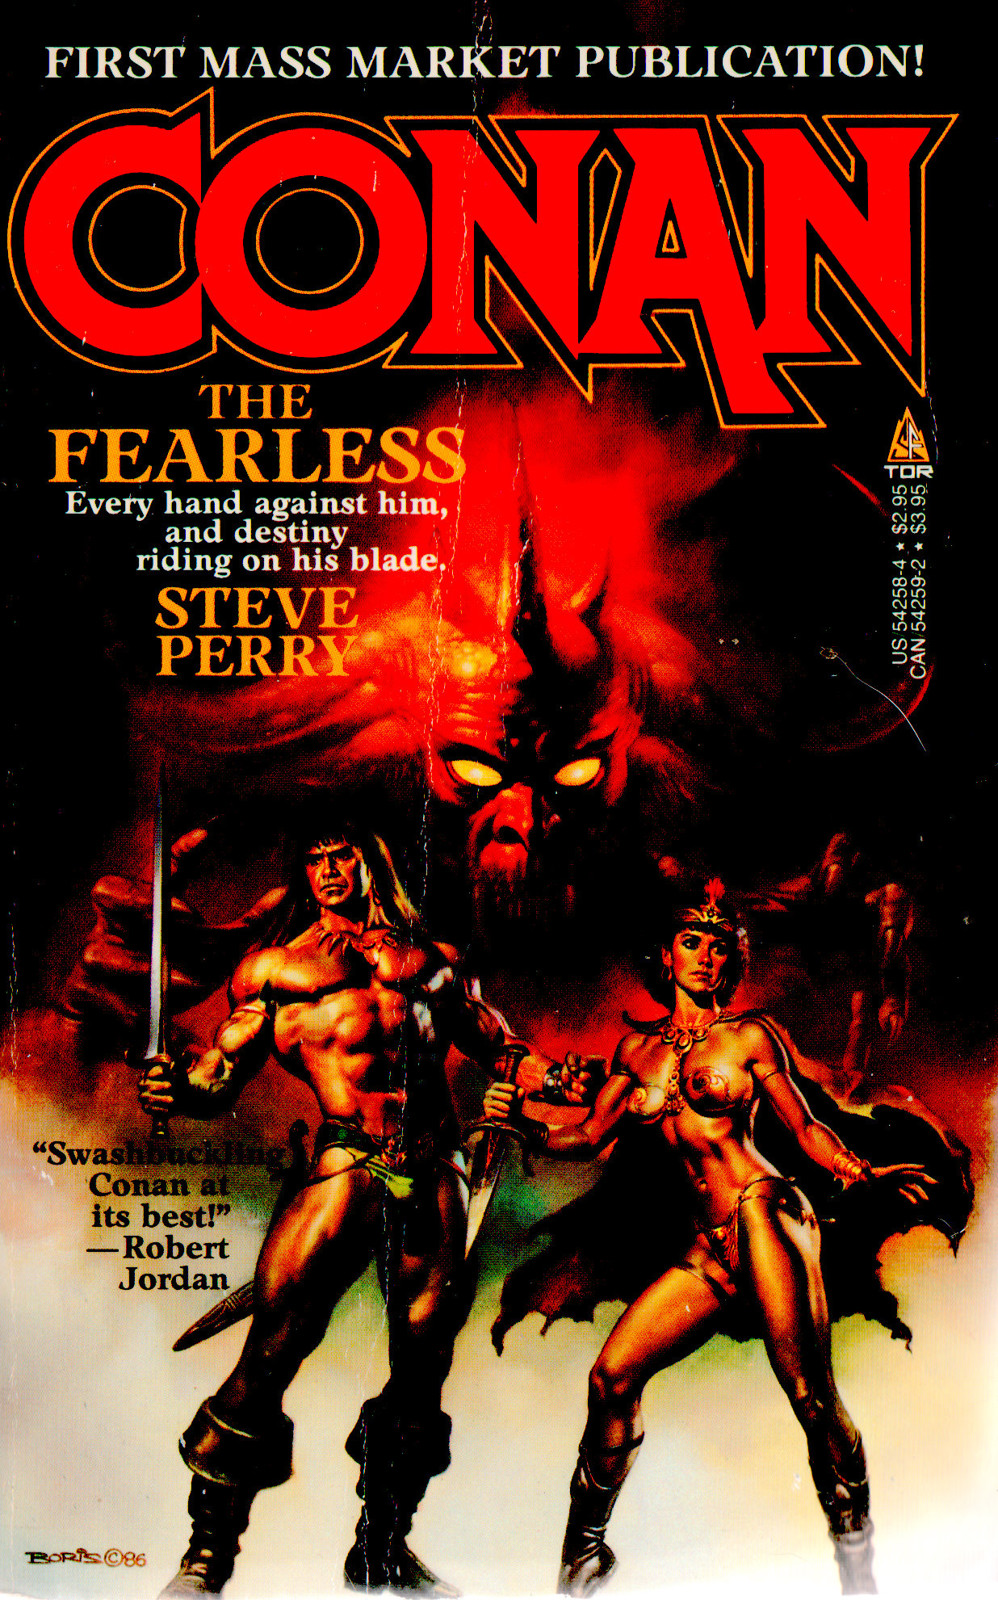 Conan the Fearless